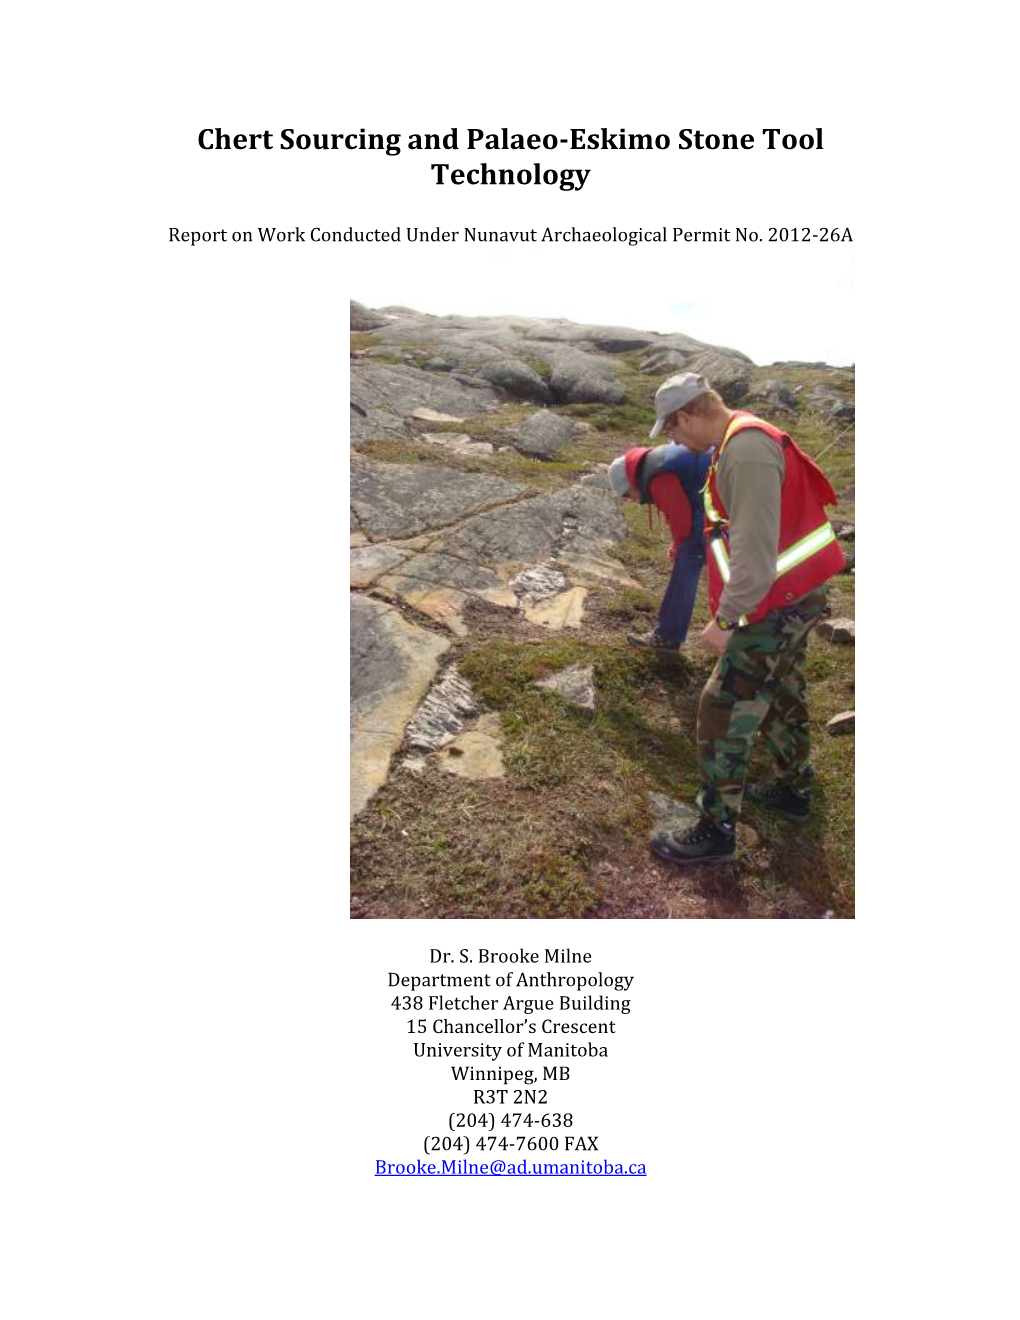 Chert Sourcing and Palaeo-Eskimo Stone Tool Technology